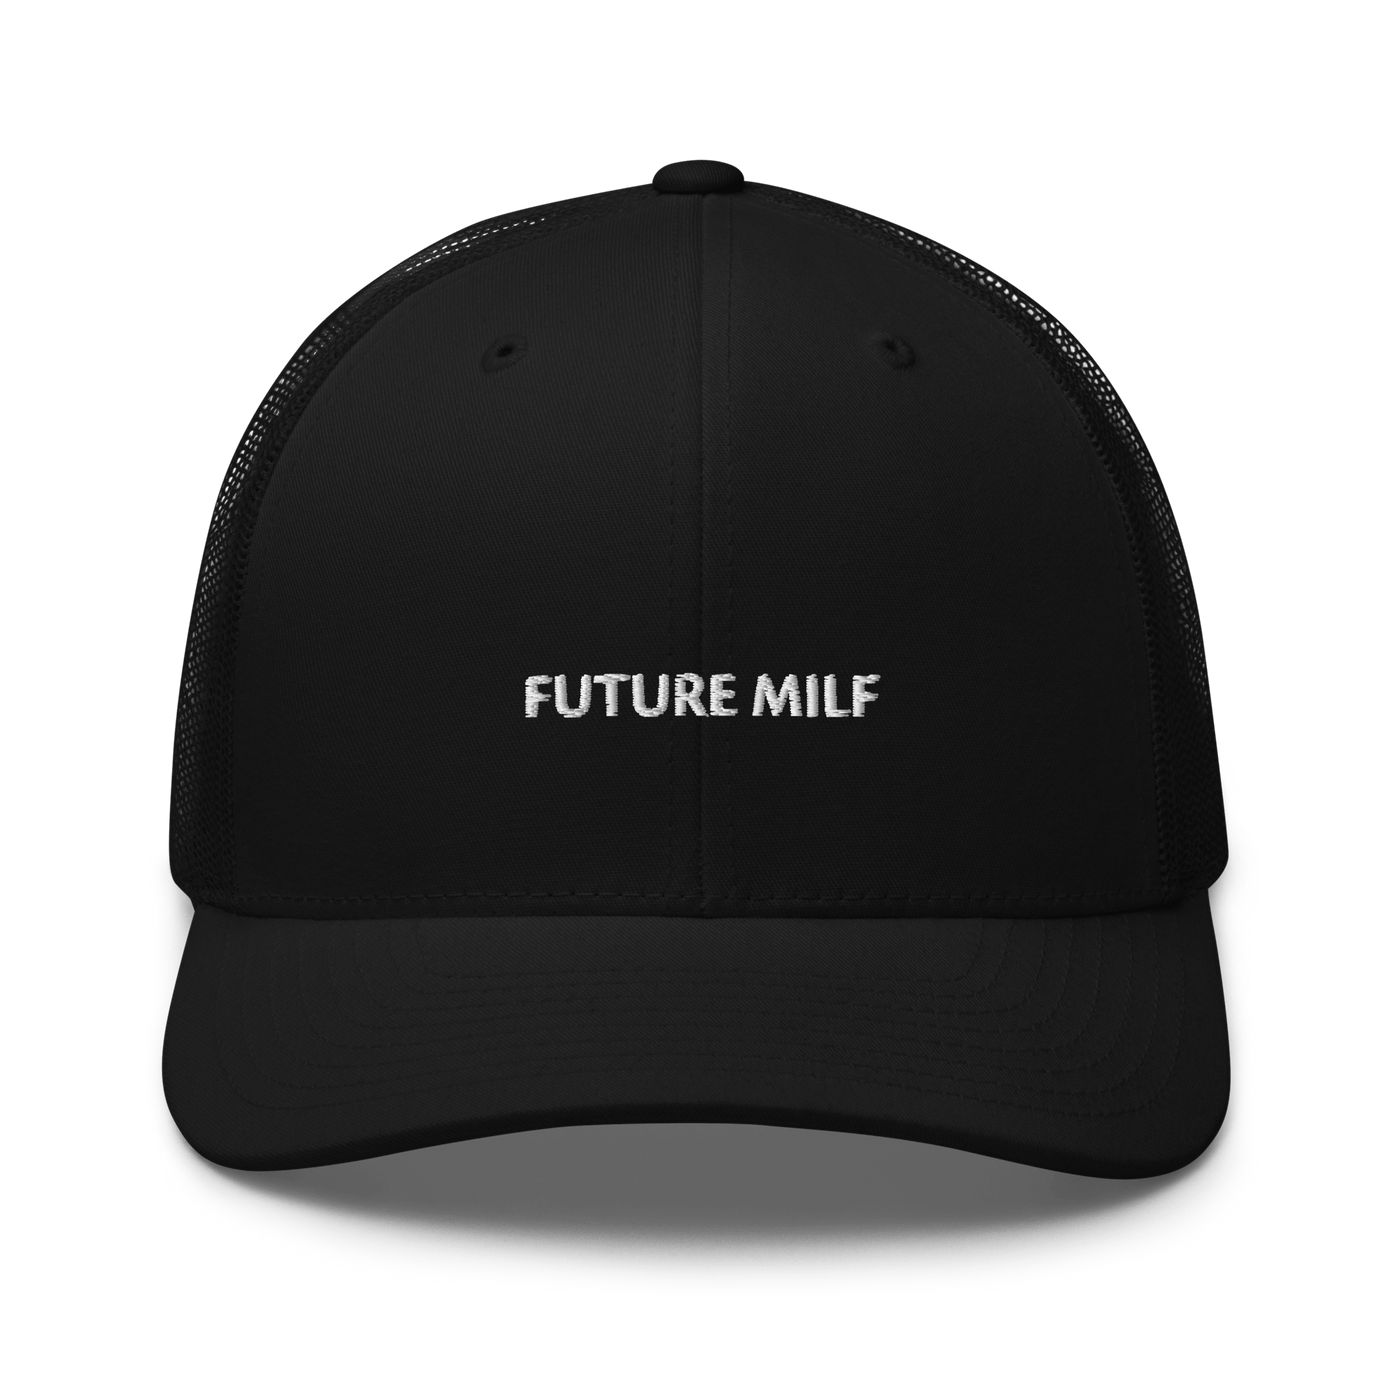 Future Milf Trucker Cap - Black - - Just Another Cap Store